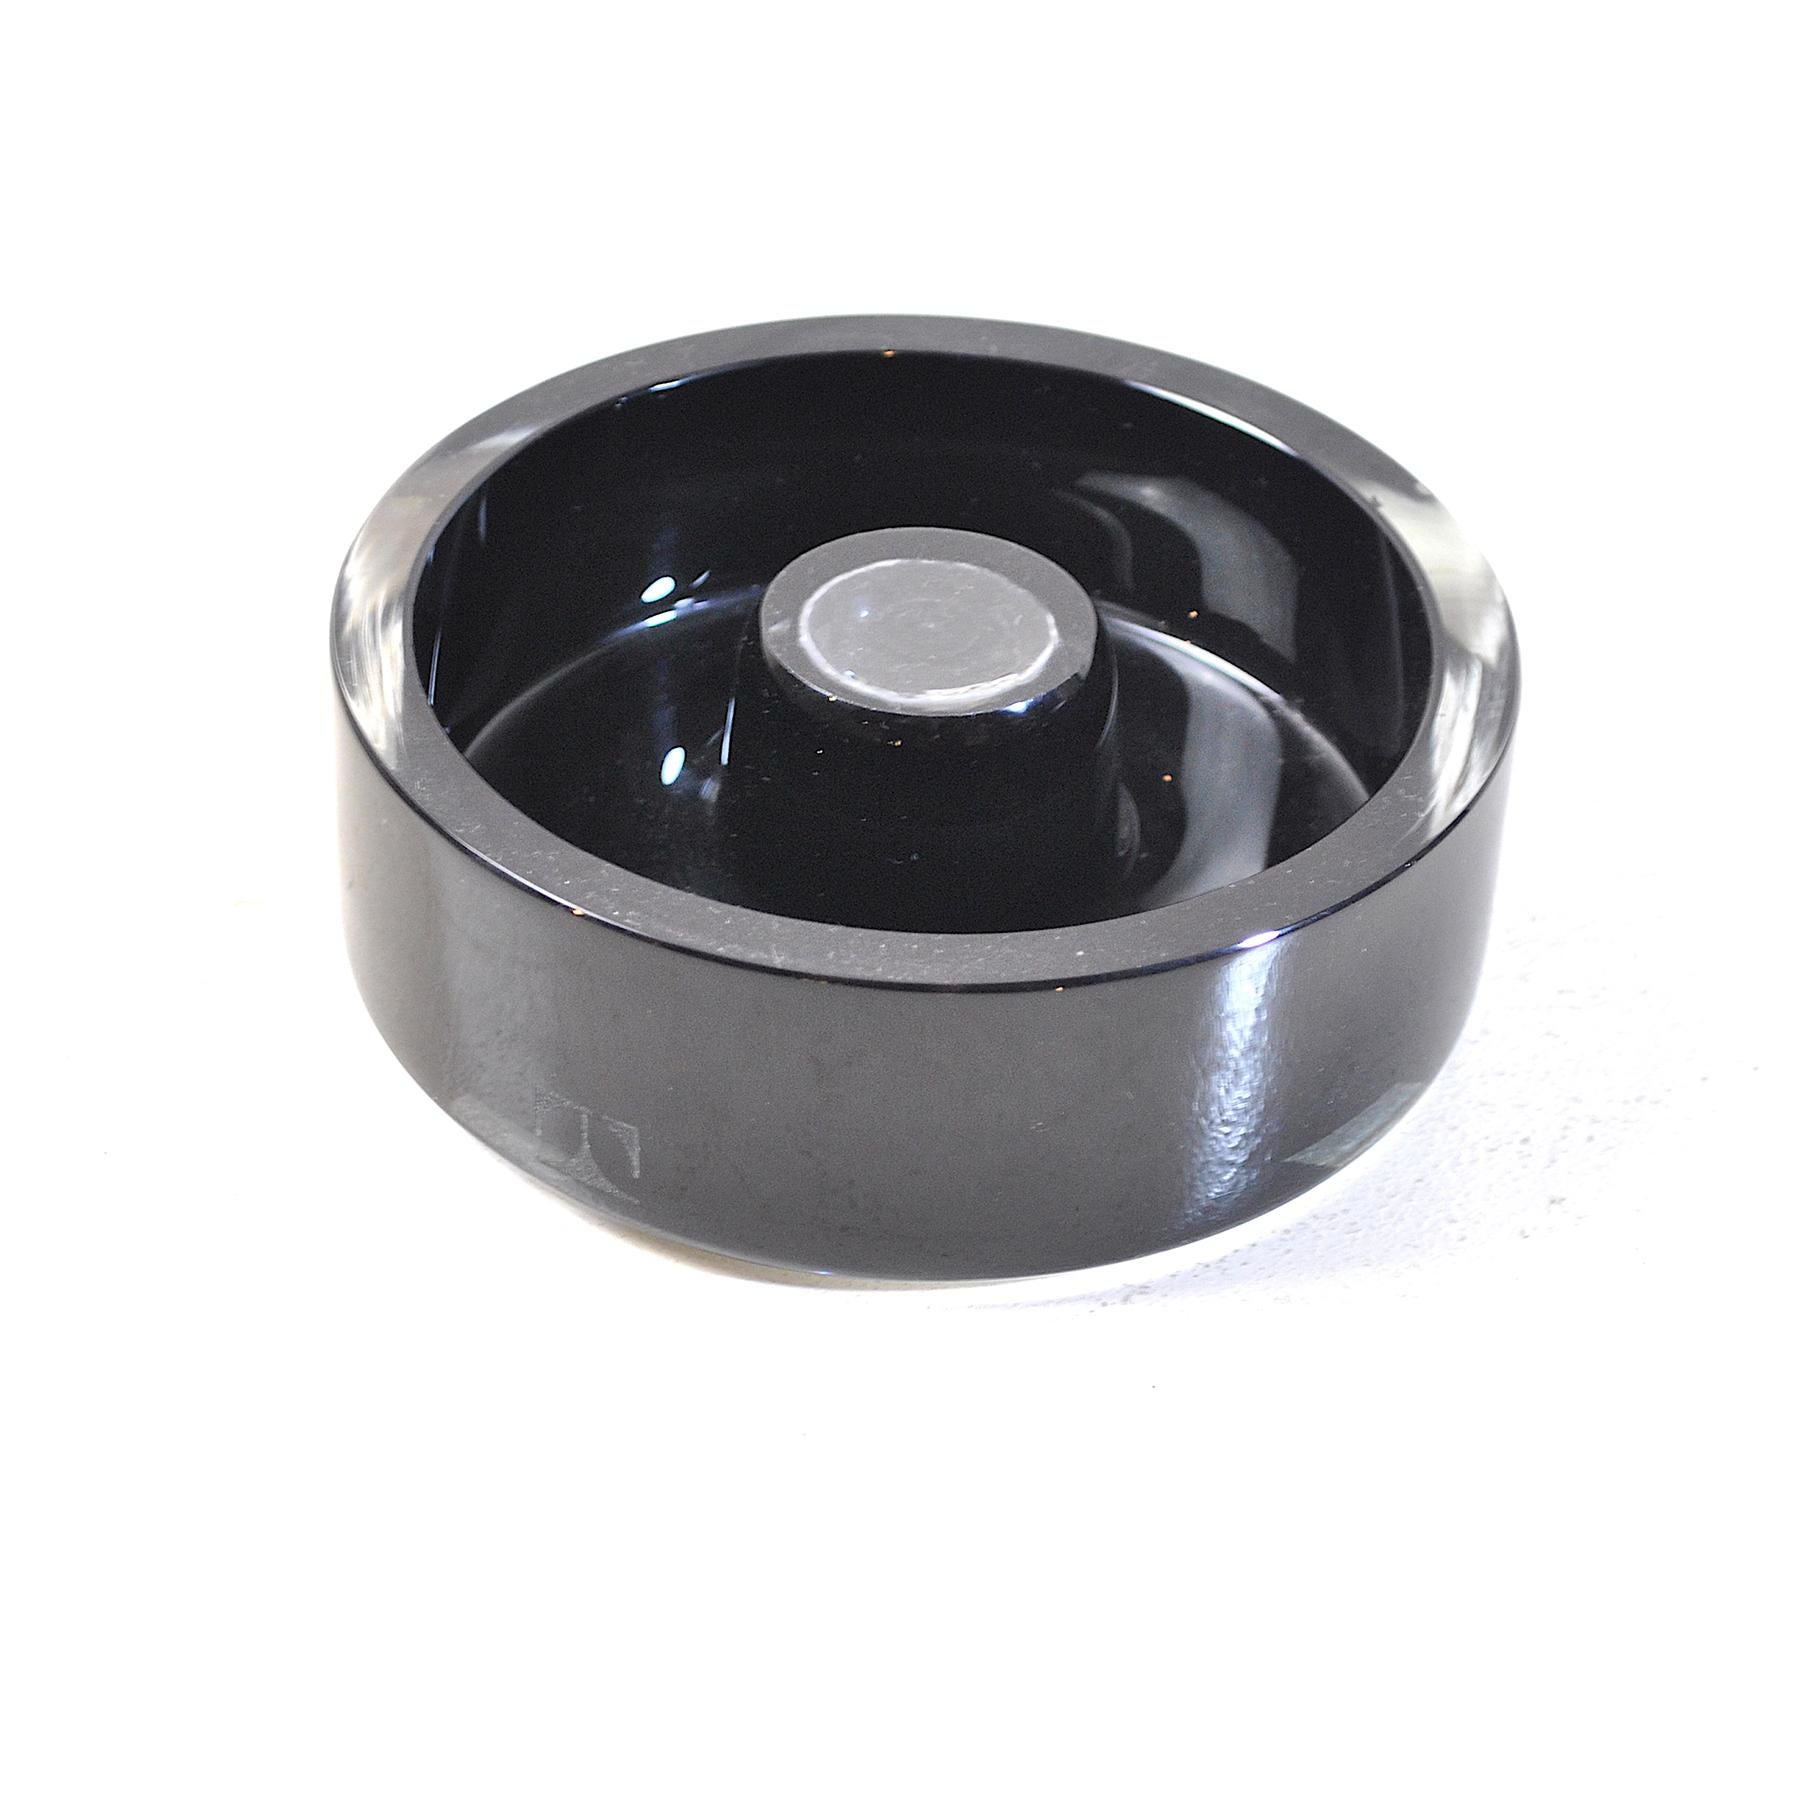 Gadget of Tecno Mim Rome little ashtray in glass colored.